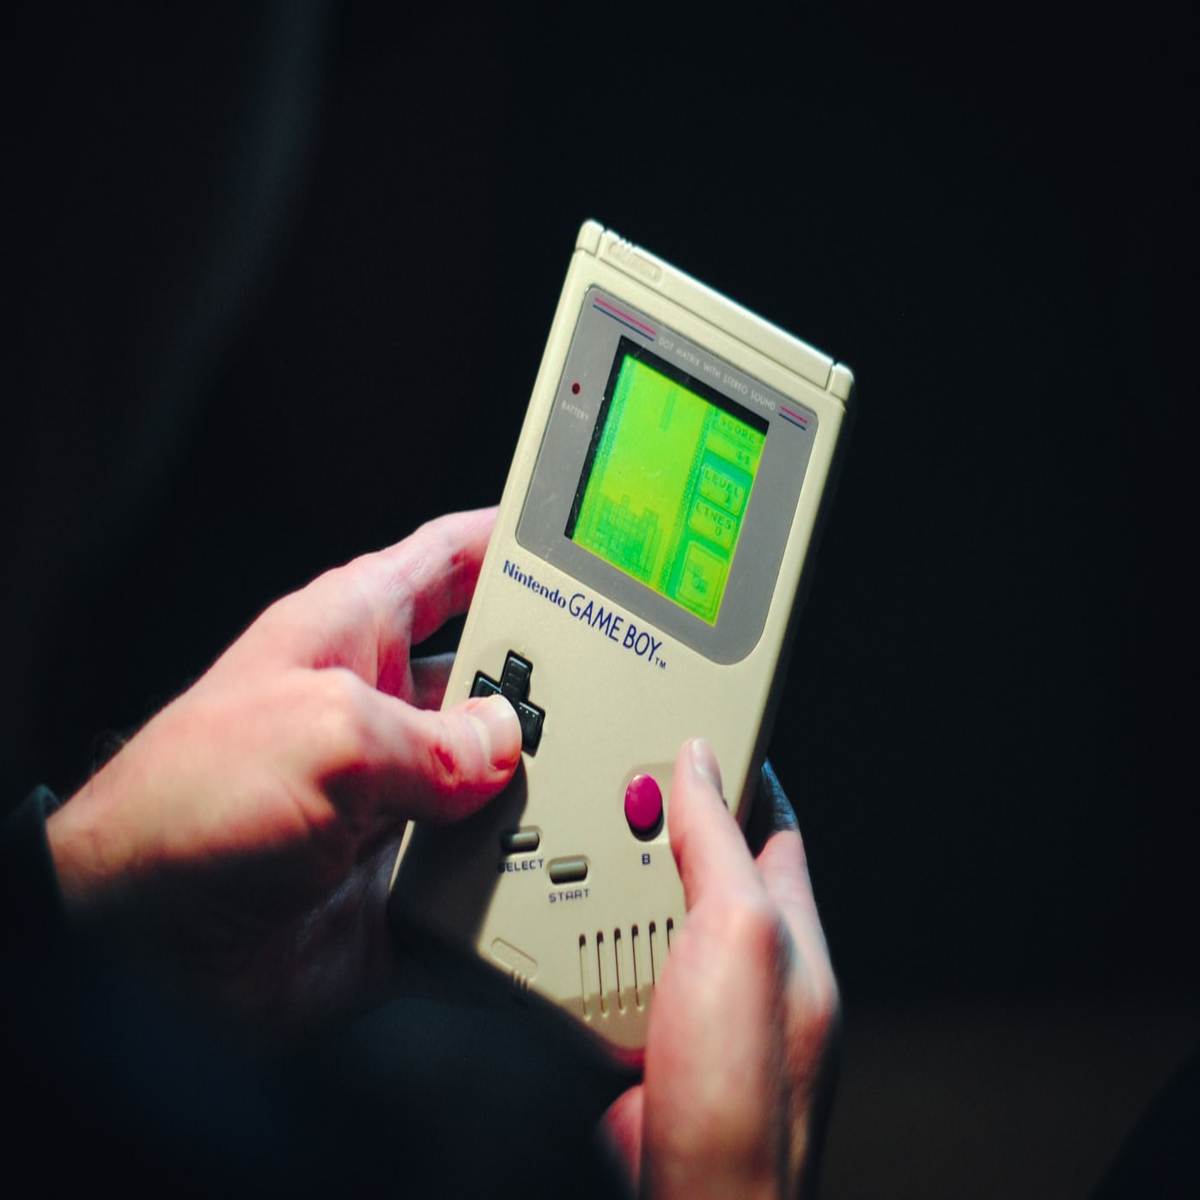 Descoberto emulador do Game Boy Advance na Nintendo Switch